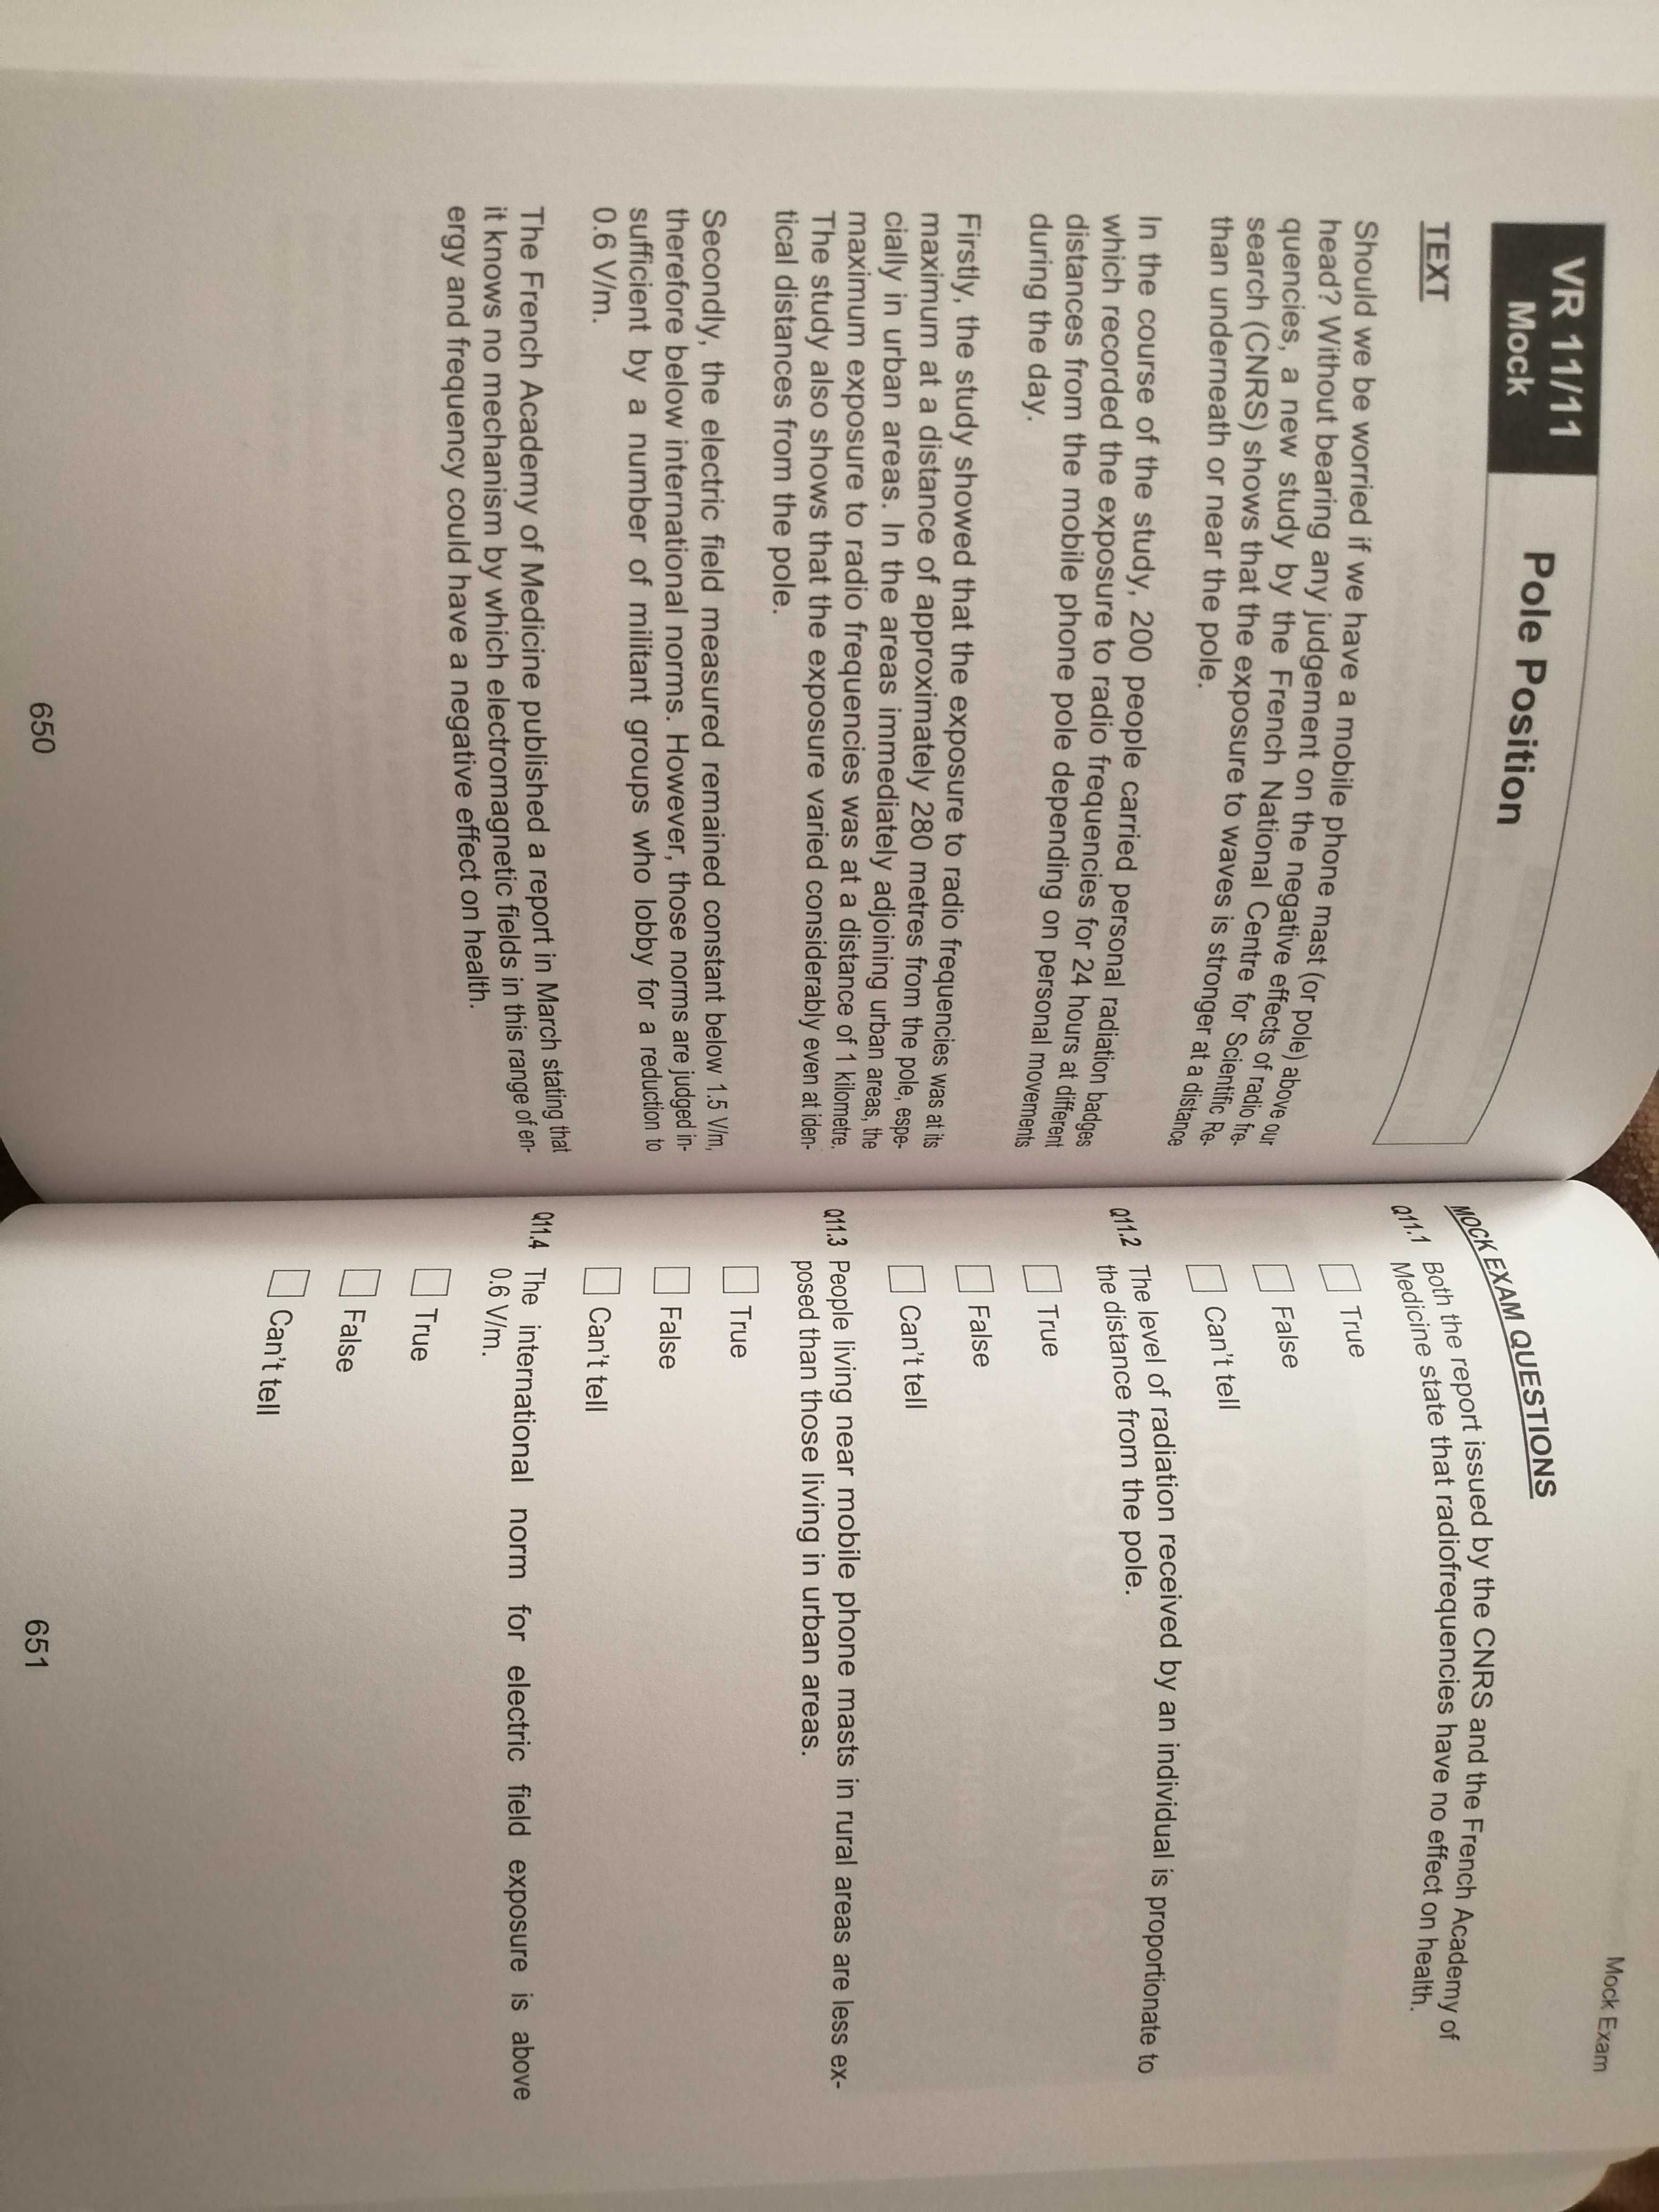 Livro "Get into medical school - 1250 UKCAT Practise Questions"